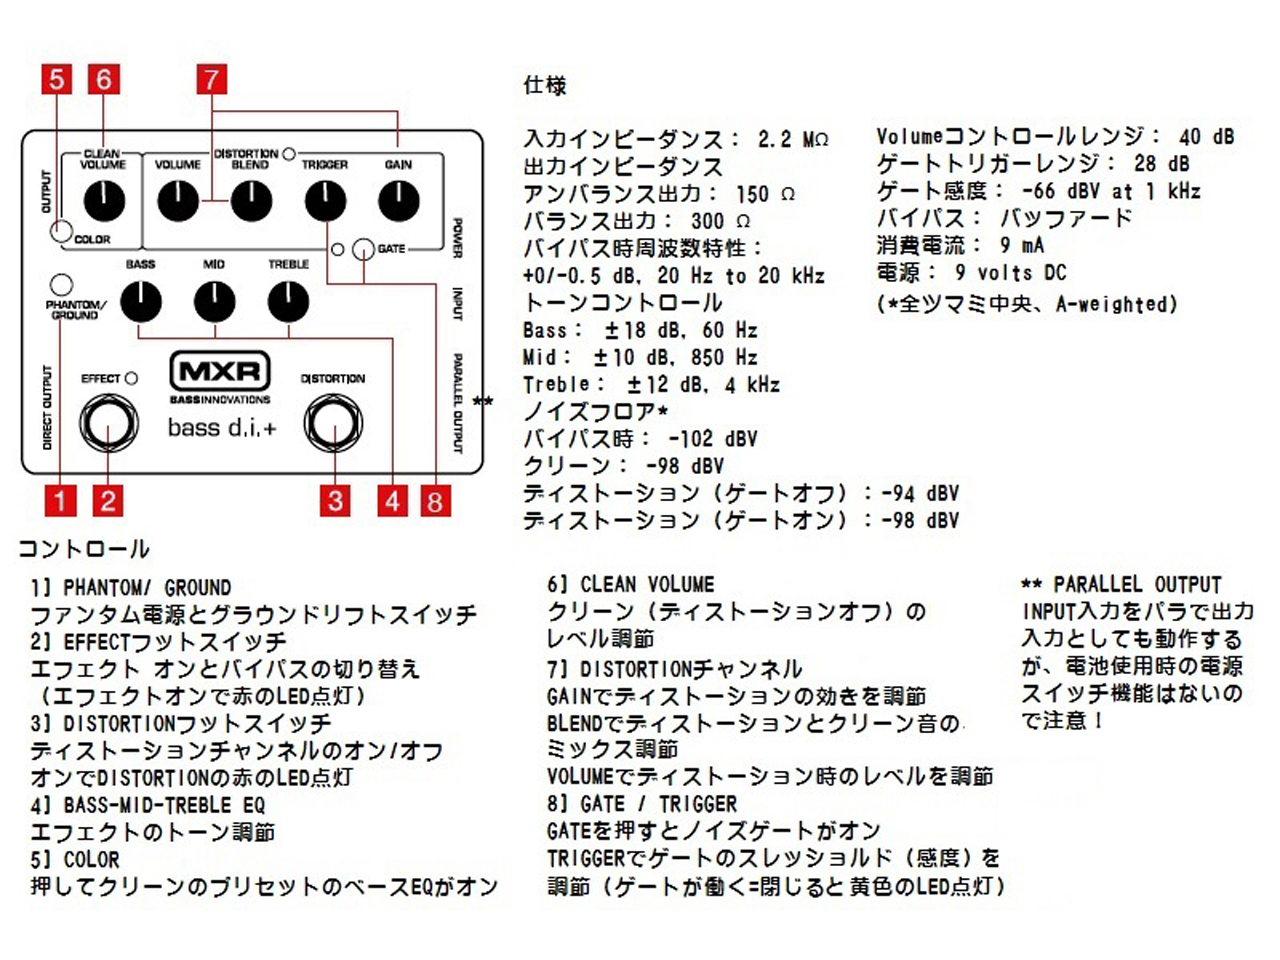 MXR(エムエックスアール) M80 Bass D.I.+ (プリアンプ/DI) お茶の水駅前店(東京)